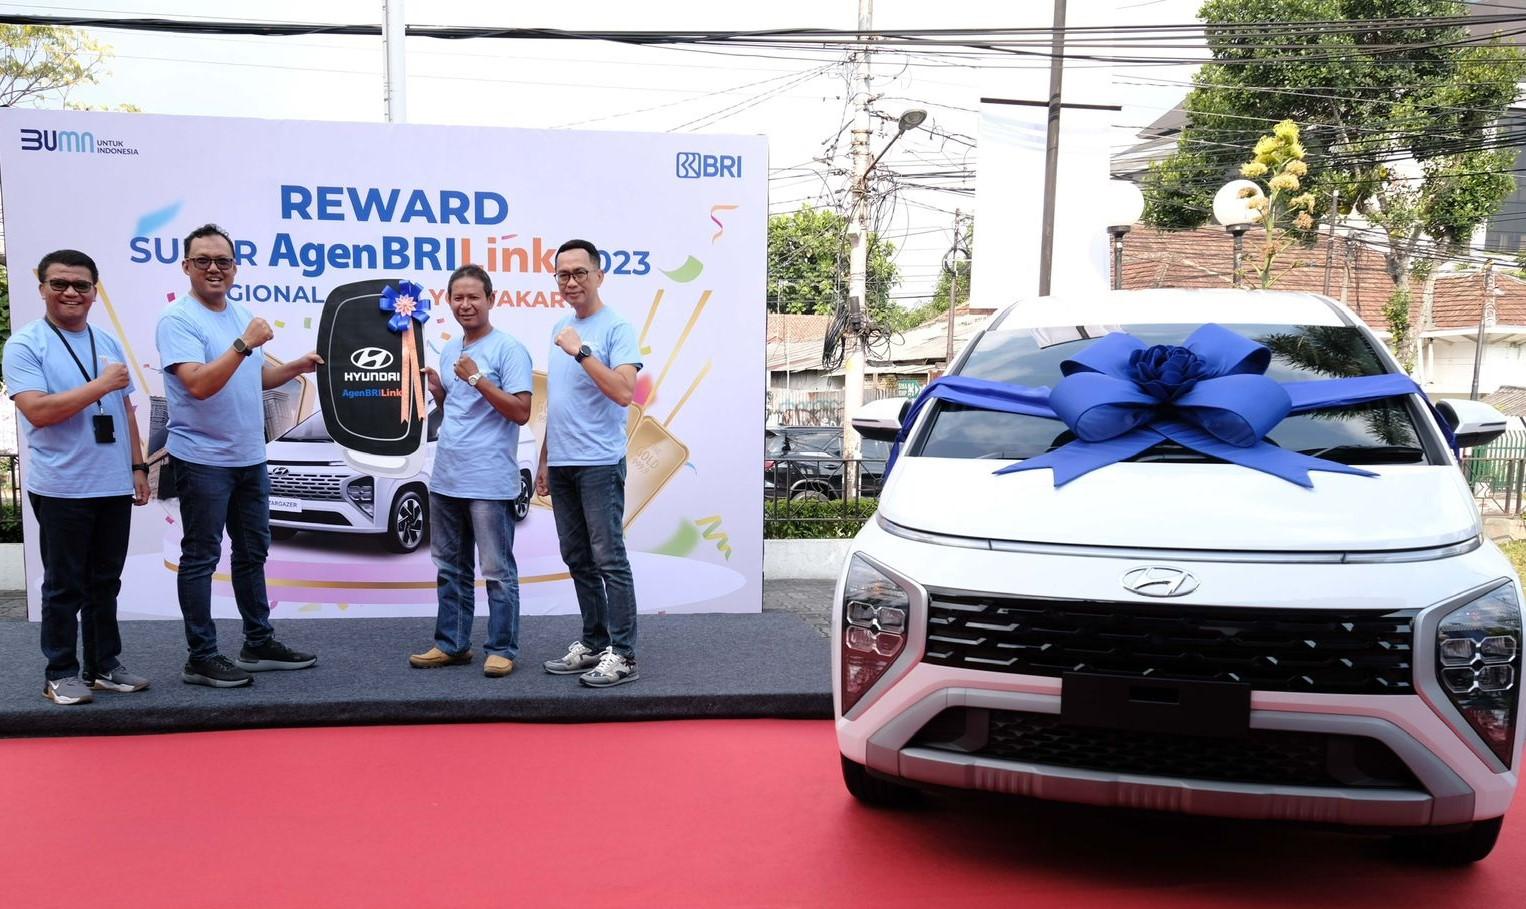 BRI Beri Hadiah Mobil untuk AgenBRILink Berprestasi di Yogyakarta